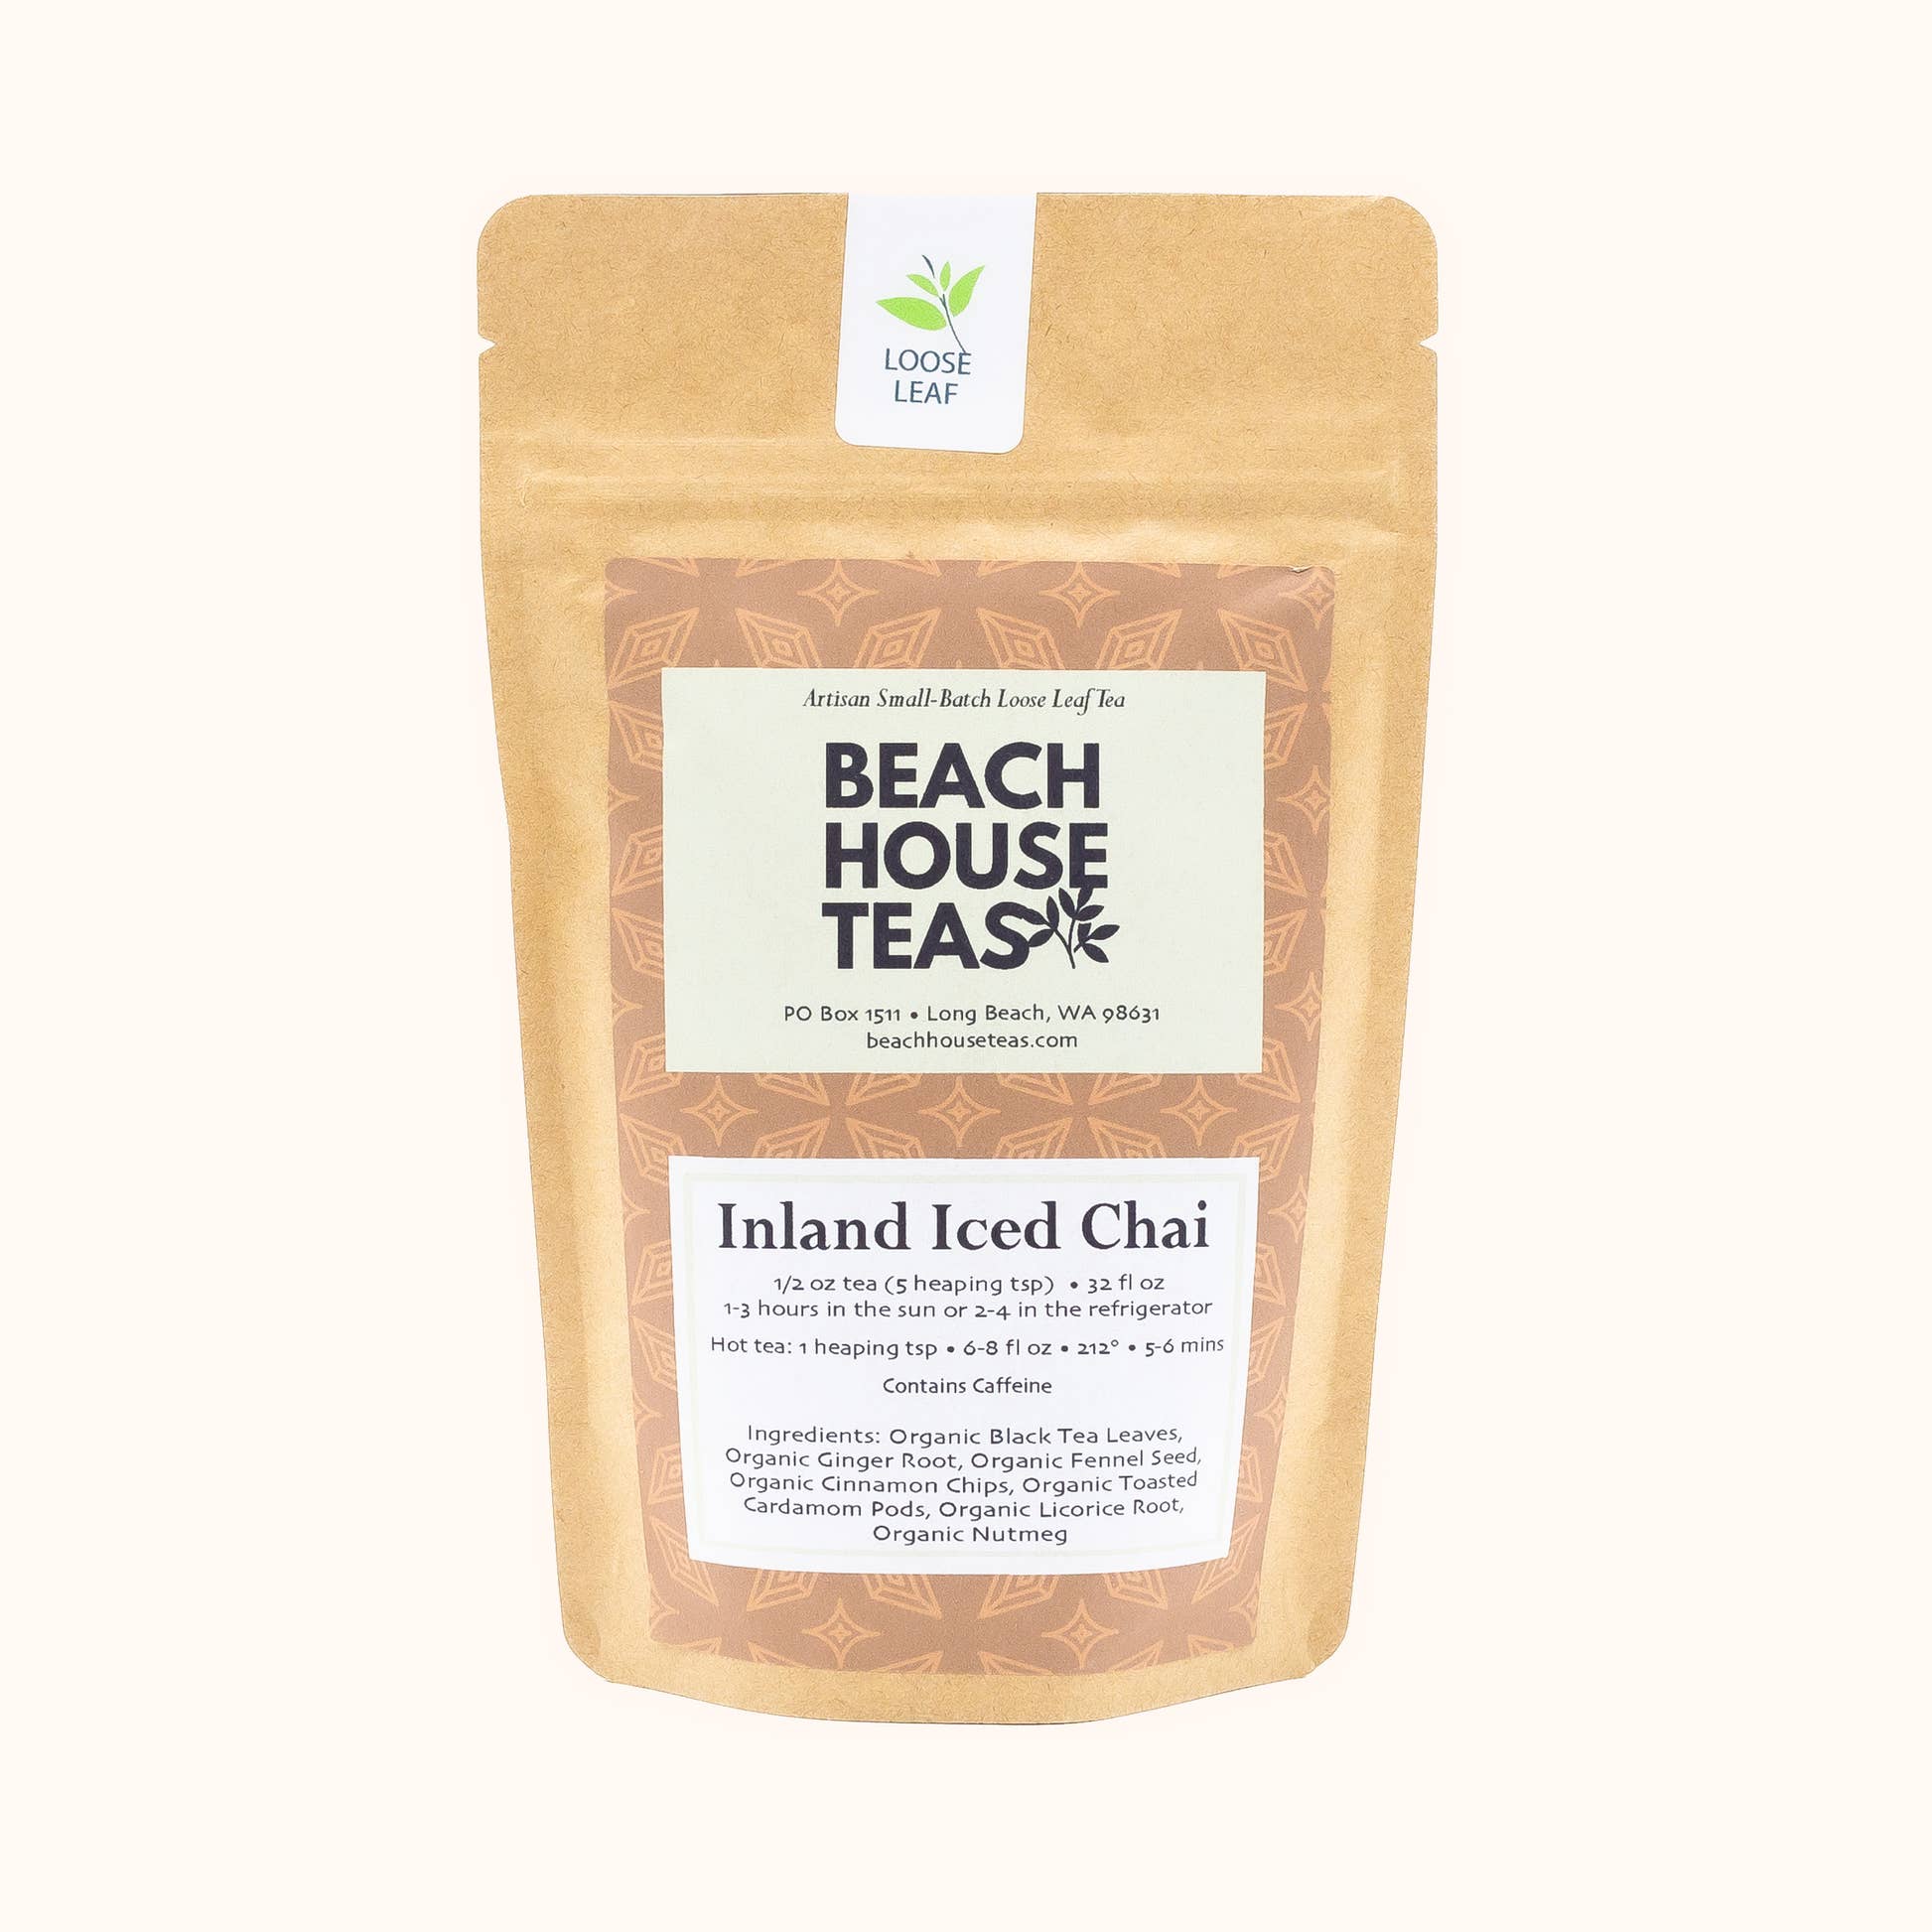 Inland Iced Chai loose leaf tea by Beach House Teas printed kraft pouch